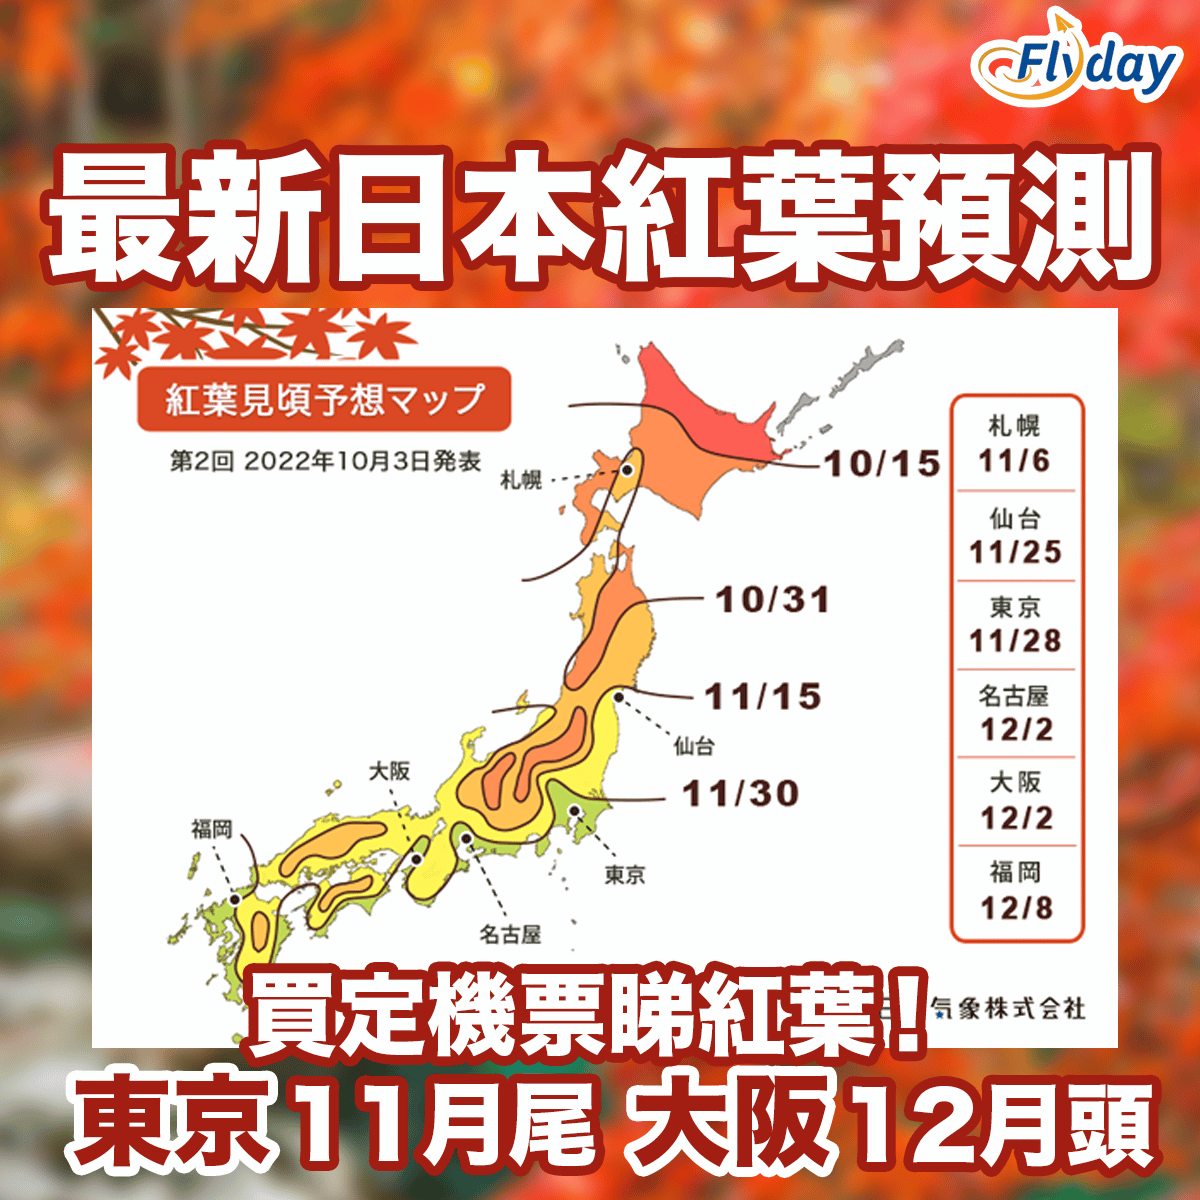 Flyday為大家整合了日本各地紅葉情報， 包括由北海道、鹿兒島到東京大阪等日本各地賞楓、賞銀杏熱點的「見頃」、即最佳觀賞期資訊，今年日本天氣較熱，個別地區的紅葉較往年推遲數天